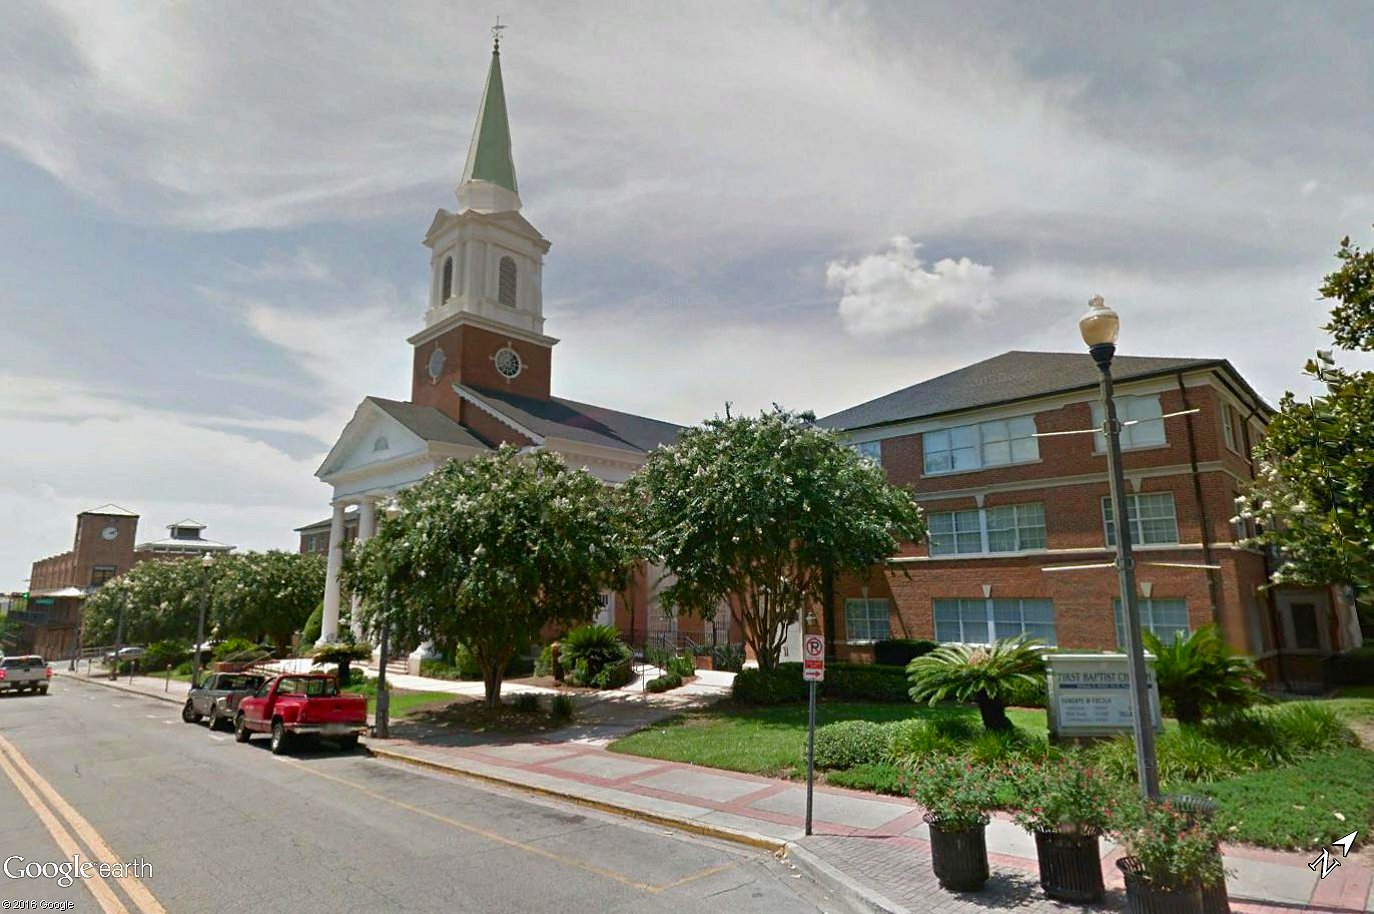 First Baptist Church - Tallahassee, Florida